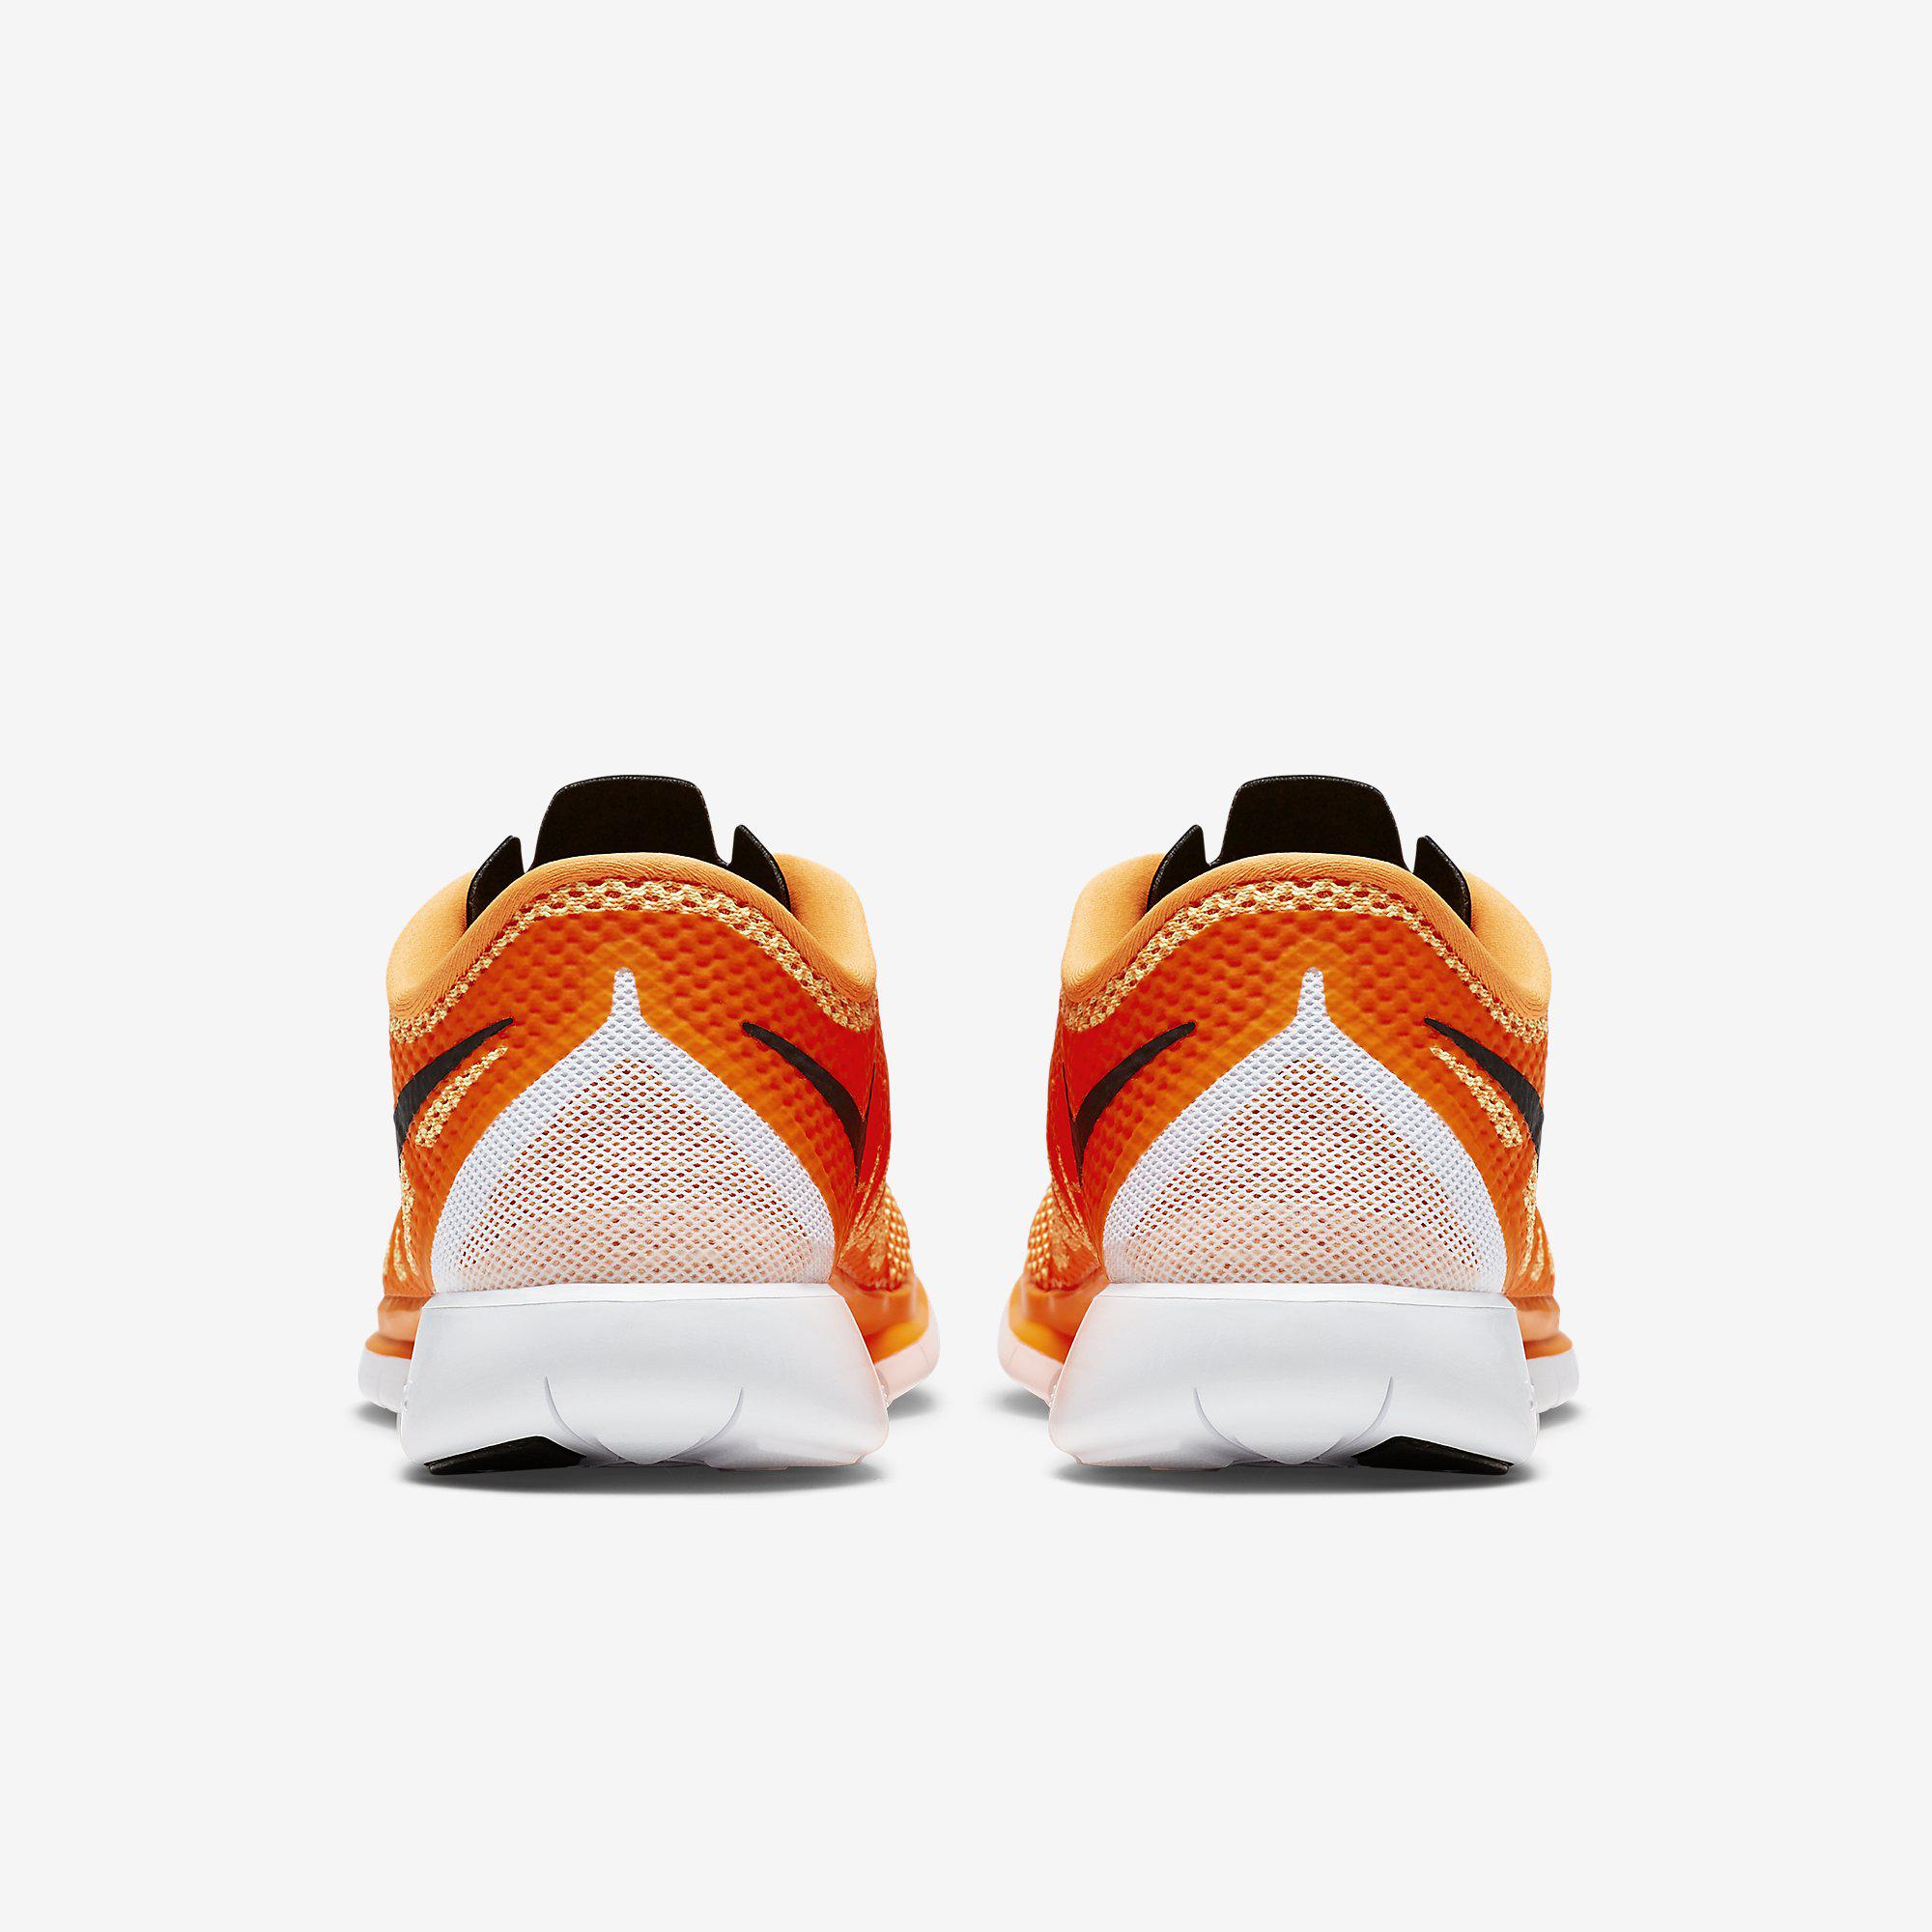 Nike Mens Free 5.0+ Running Shoes - Orange/Black - Tennisnuts.com